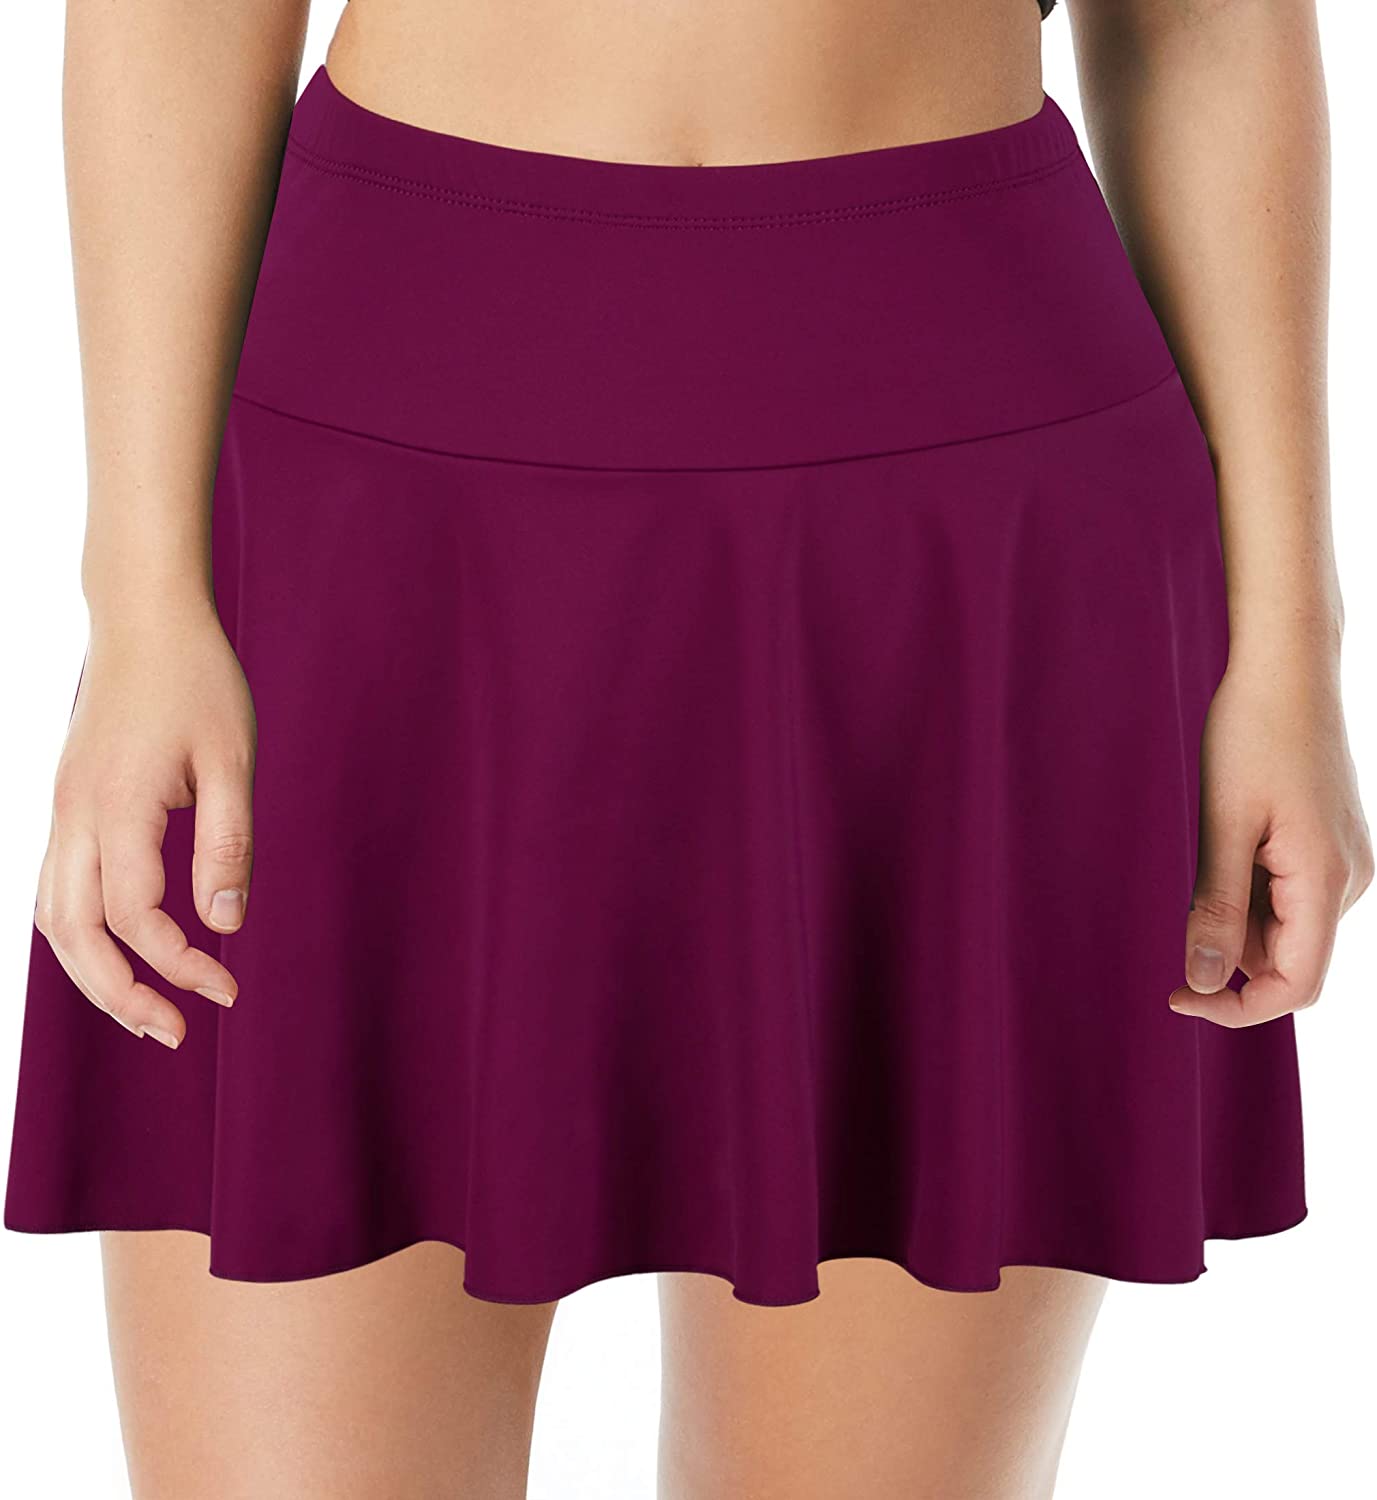 Septangle Women's High Waist Swim Skirt Tummy Control, Fuchsia, Size 14 ...